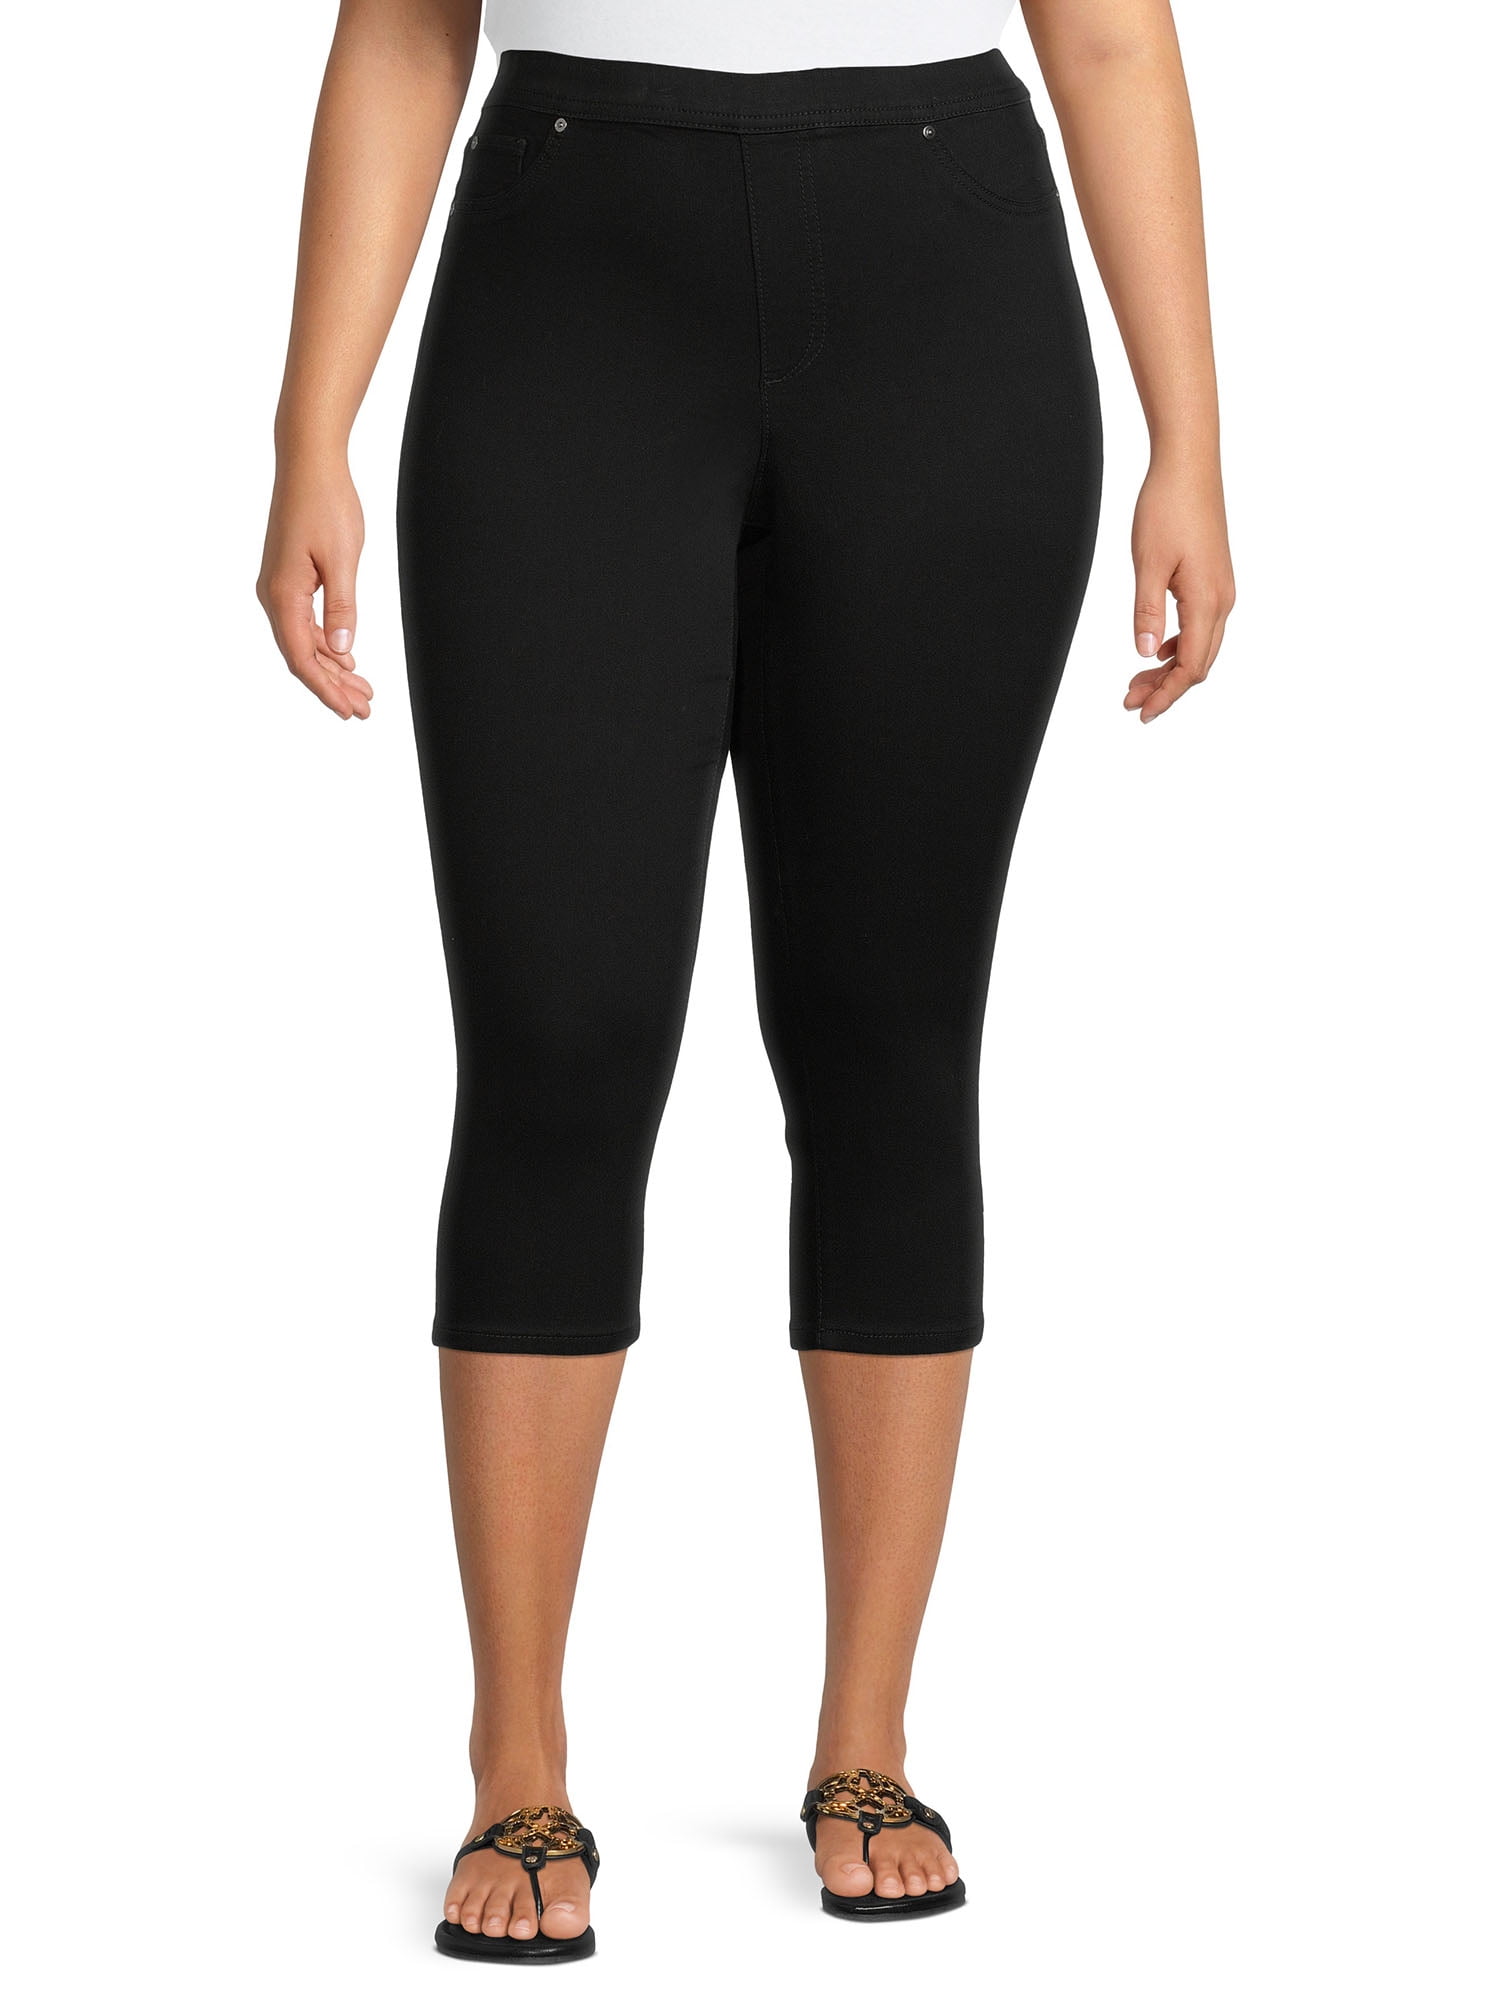 Terra & Sky Women's Plus Size Pull-On Capris - Walmart.com